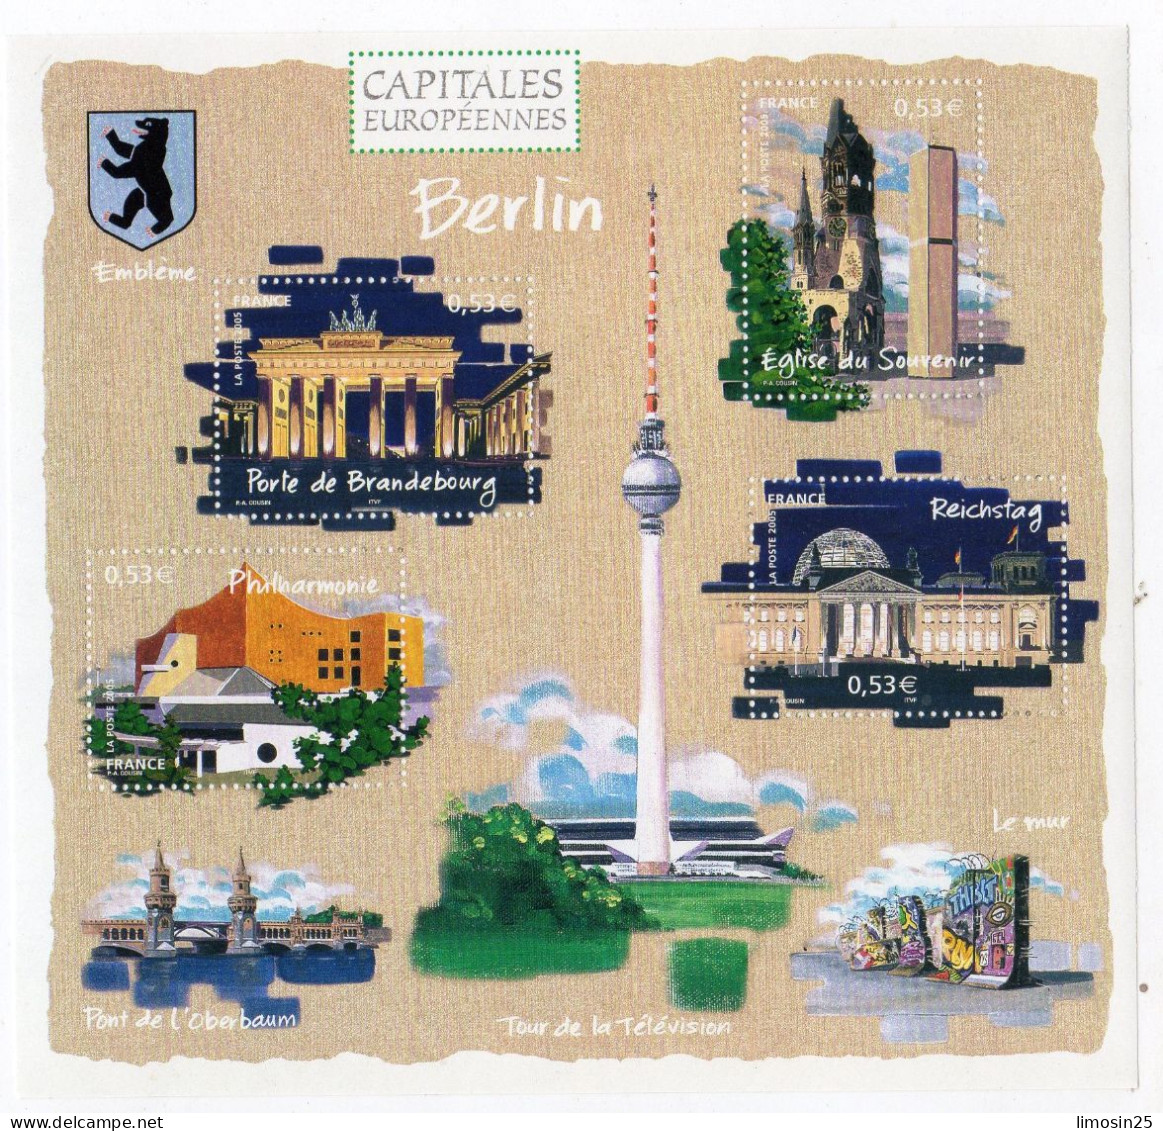 CAPITALES EUROPEENNES - Berlin - 2005 - Ungebraucht